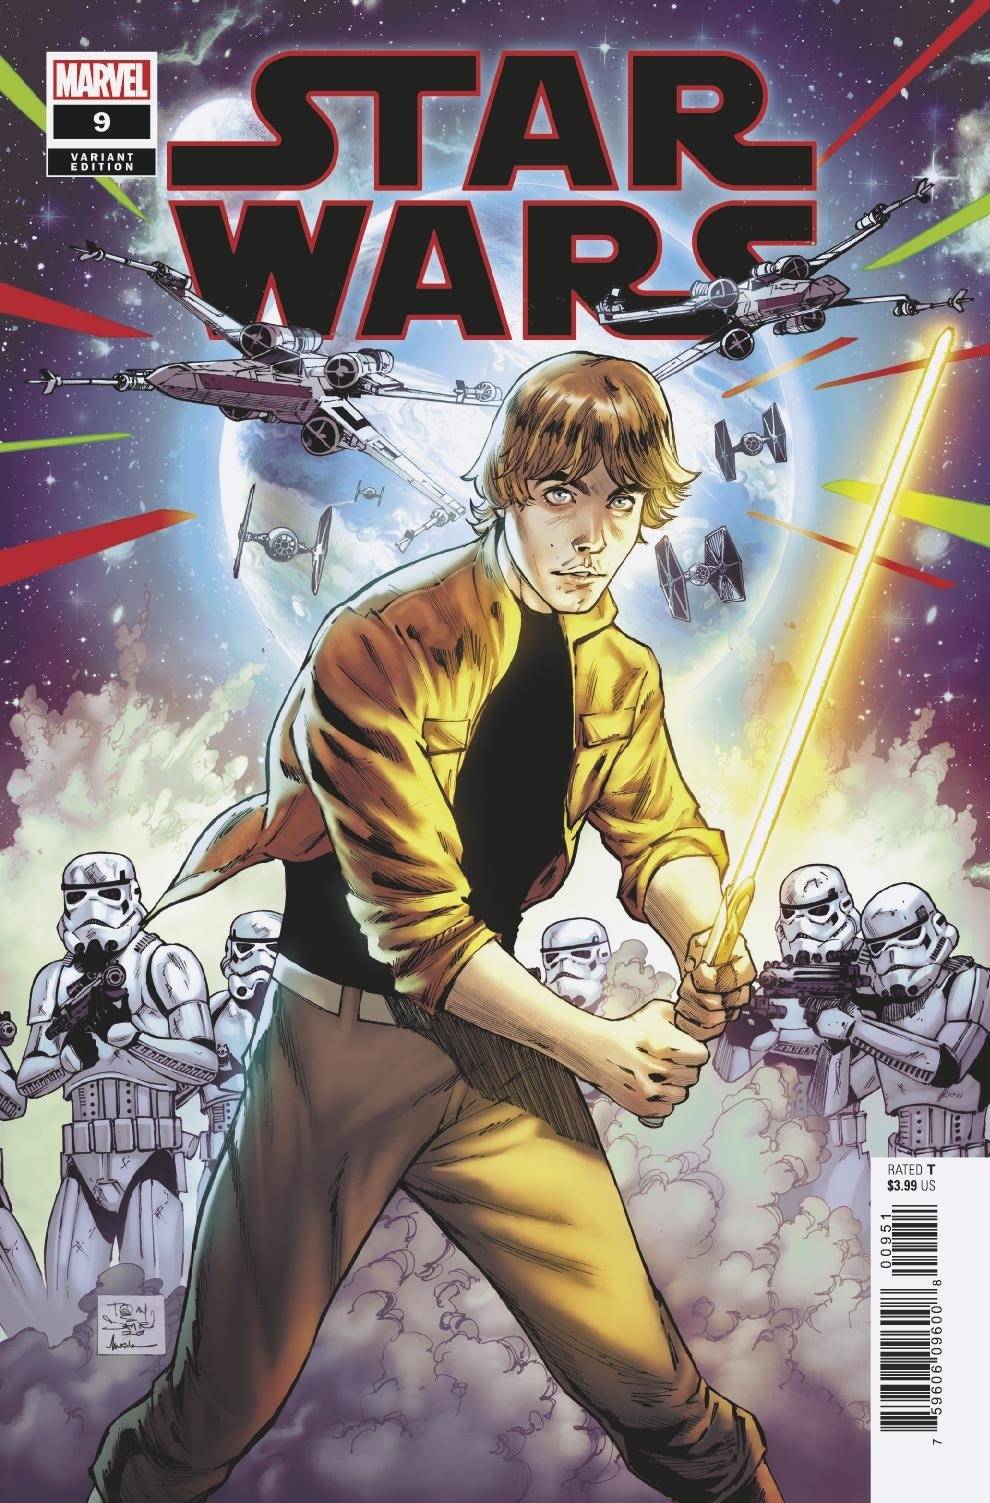 Star Wars #9 (Tony Daniel Variant Cover) (09.12.2020)